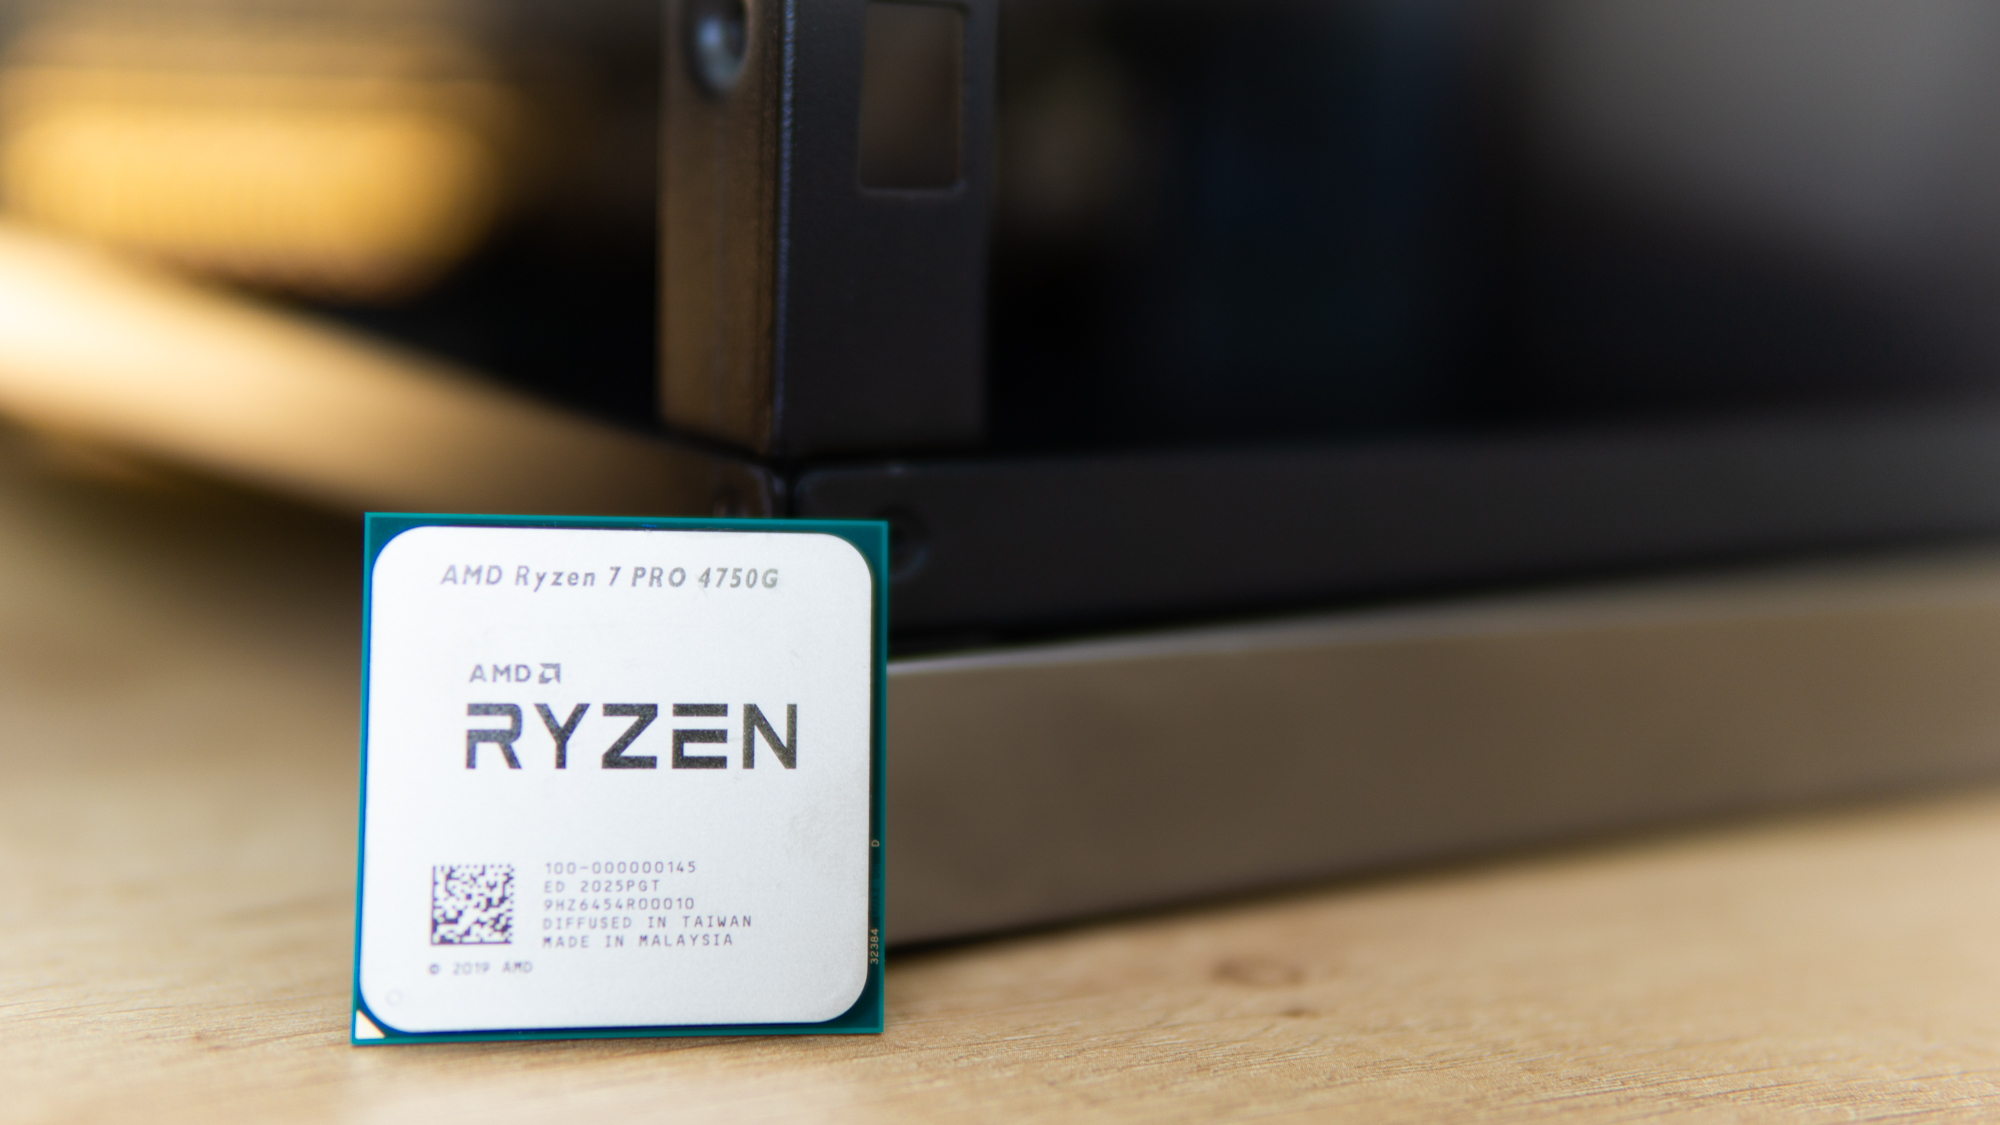 Ryzen 7 pro купить. Ryzen 7 4750g. AMD Ryzen 7 Pro 4750g. Процессор AMD Ryzen 7 Pro 4750g, socketam4, OEM [100-000000145]. Ryzen 7 4750g фото.